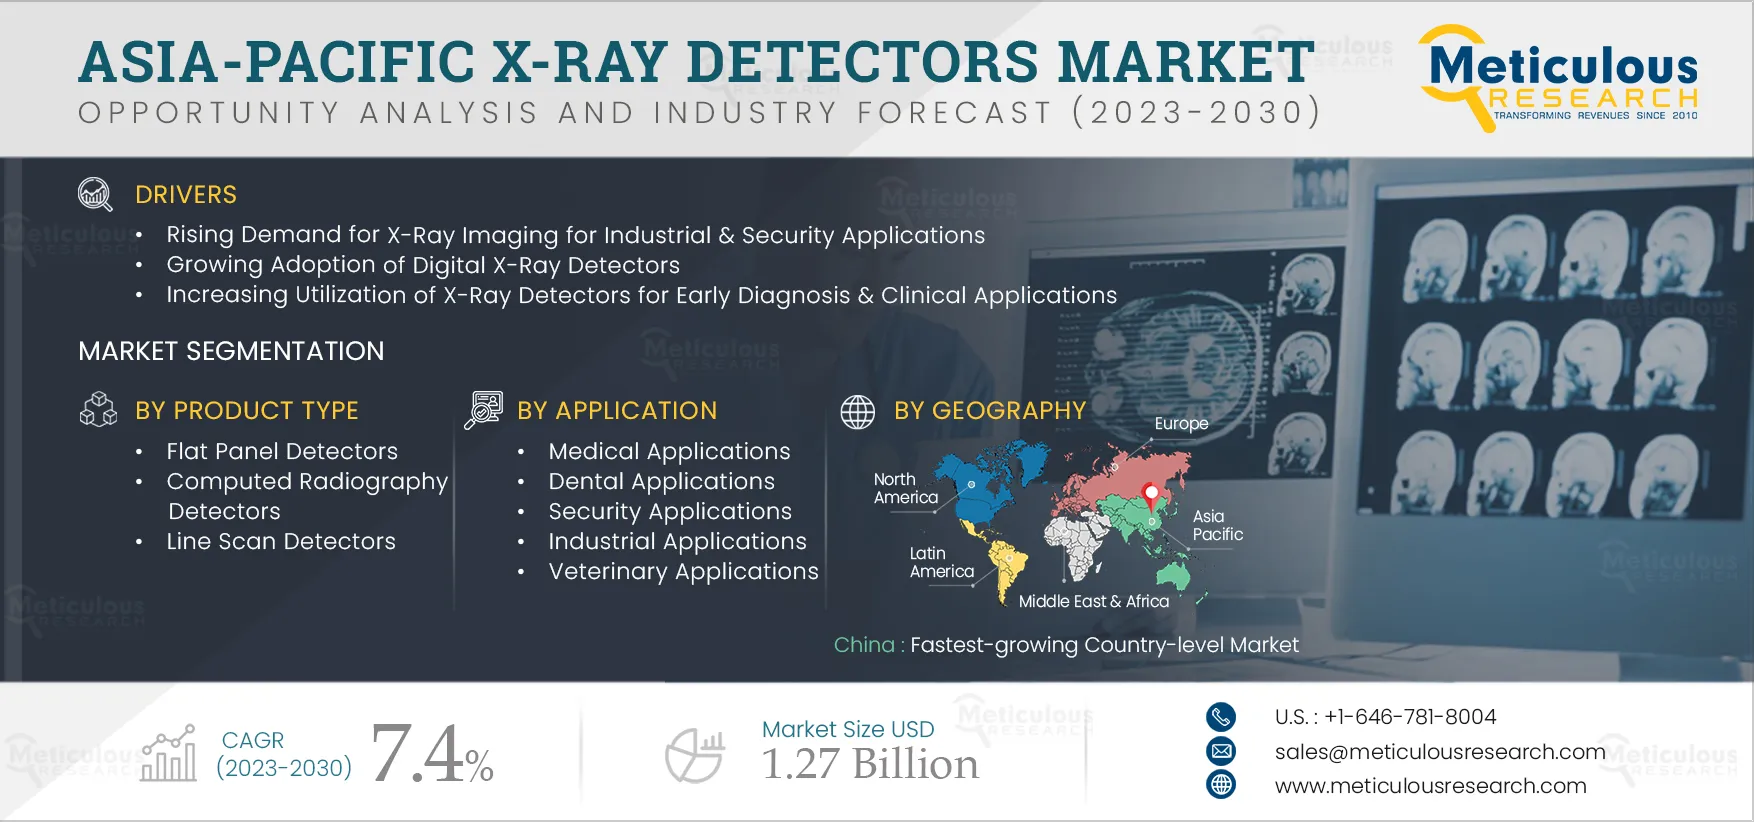 Asia-Pacific X-ray Detectors Market